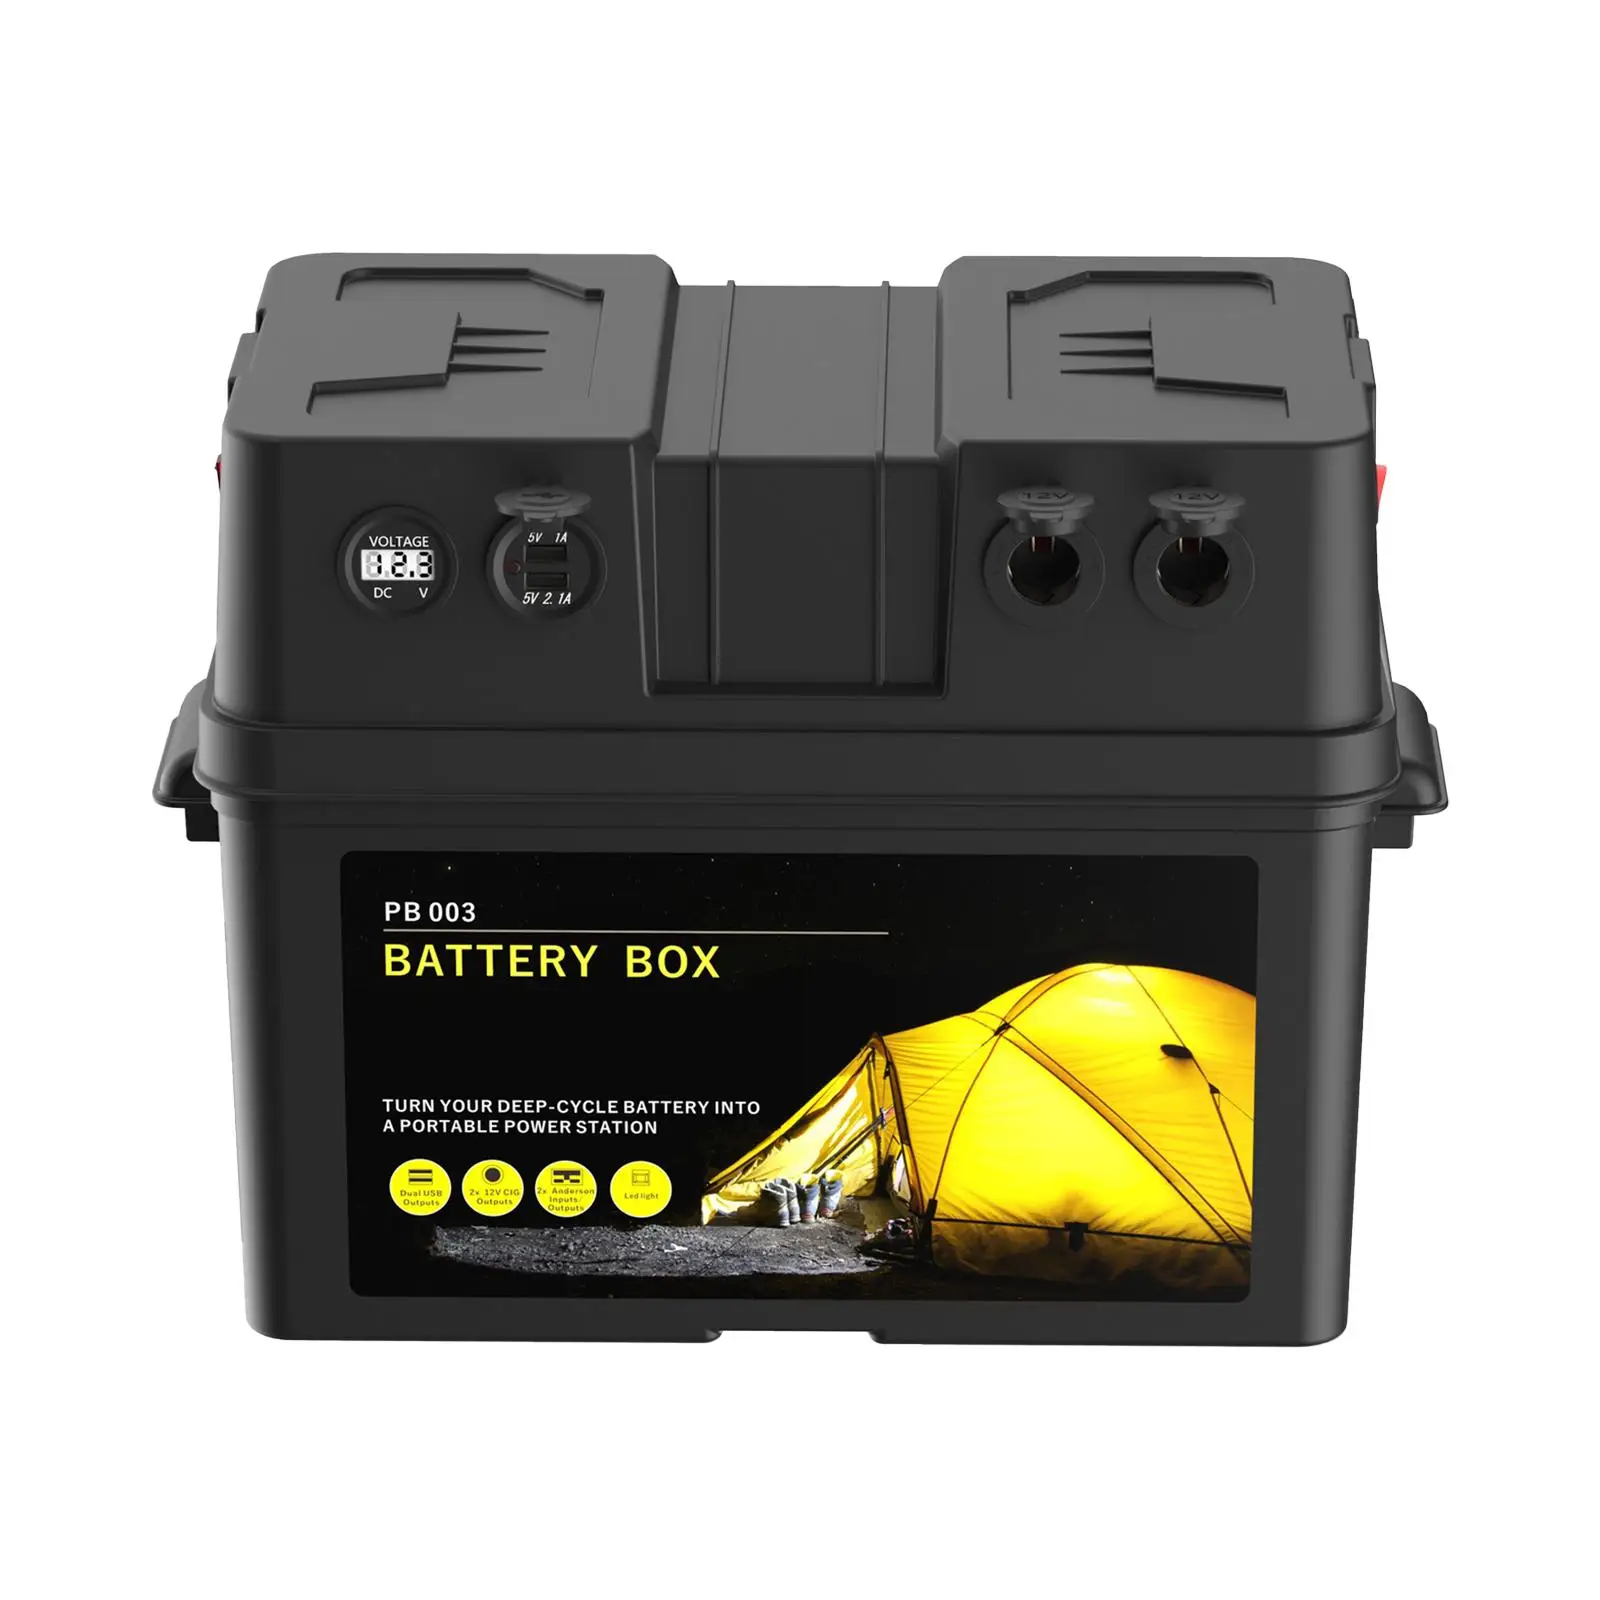 Batteries Carrier Portable Power Center Station 12 V Heavy Duty Motor Battery Box for Camping Truck Travel SUV Trailer